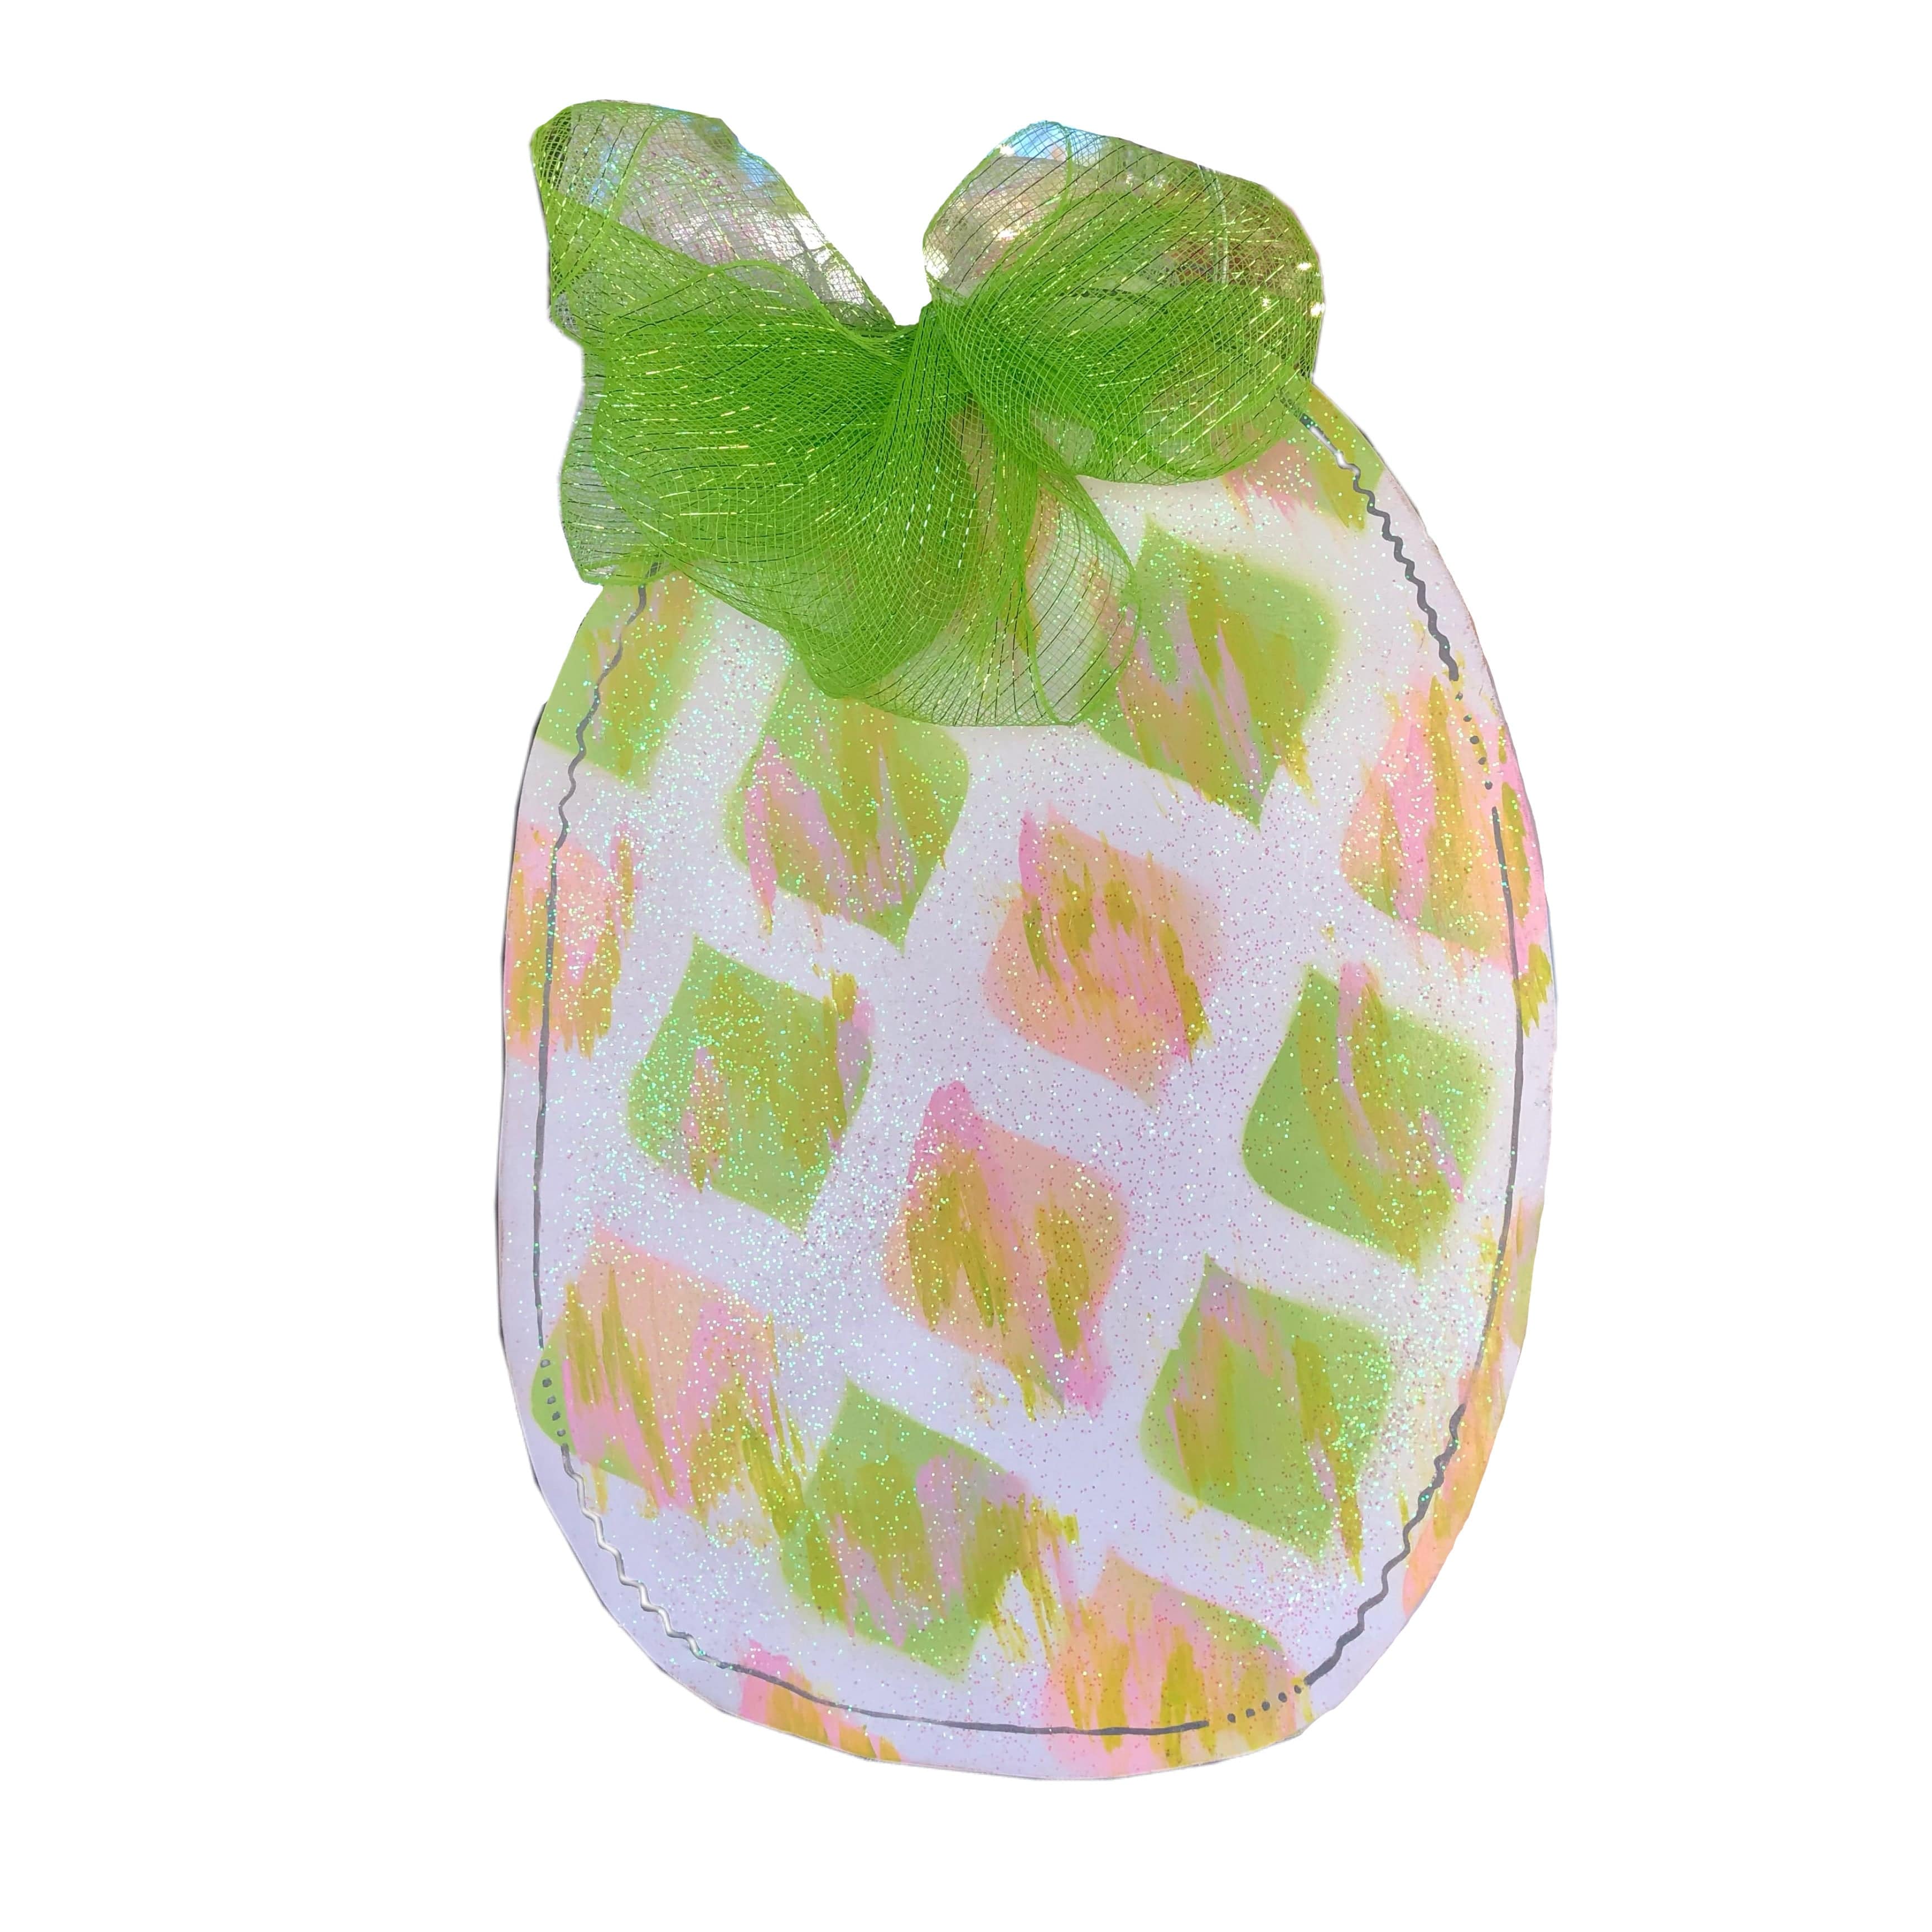 Toodle Lou Designs - Toodle Lou Designs Tie Dye Easter Egg Door Hanger - Little Miss Muffin Children & Home